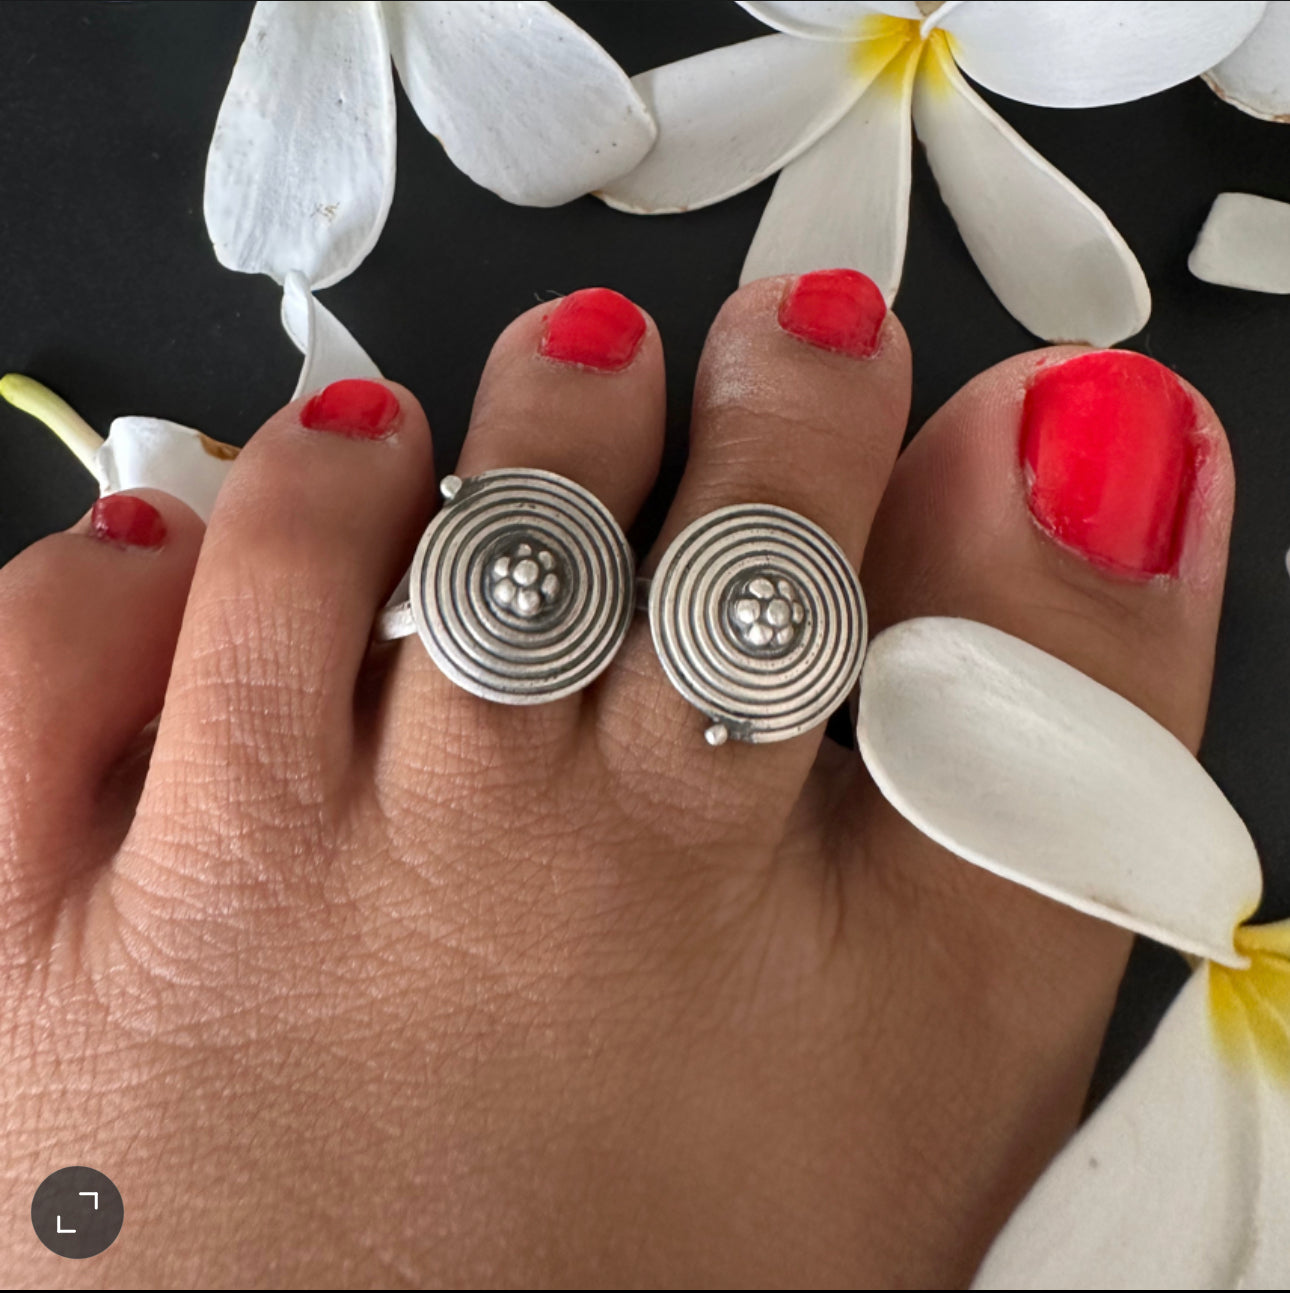 Pin on Trending #Feet #Jewelry Designs #2020